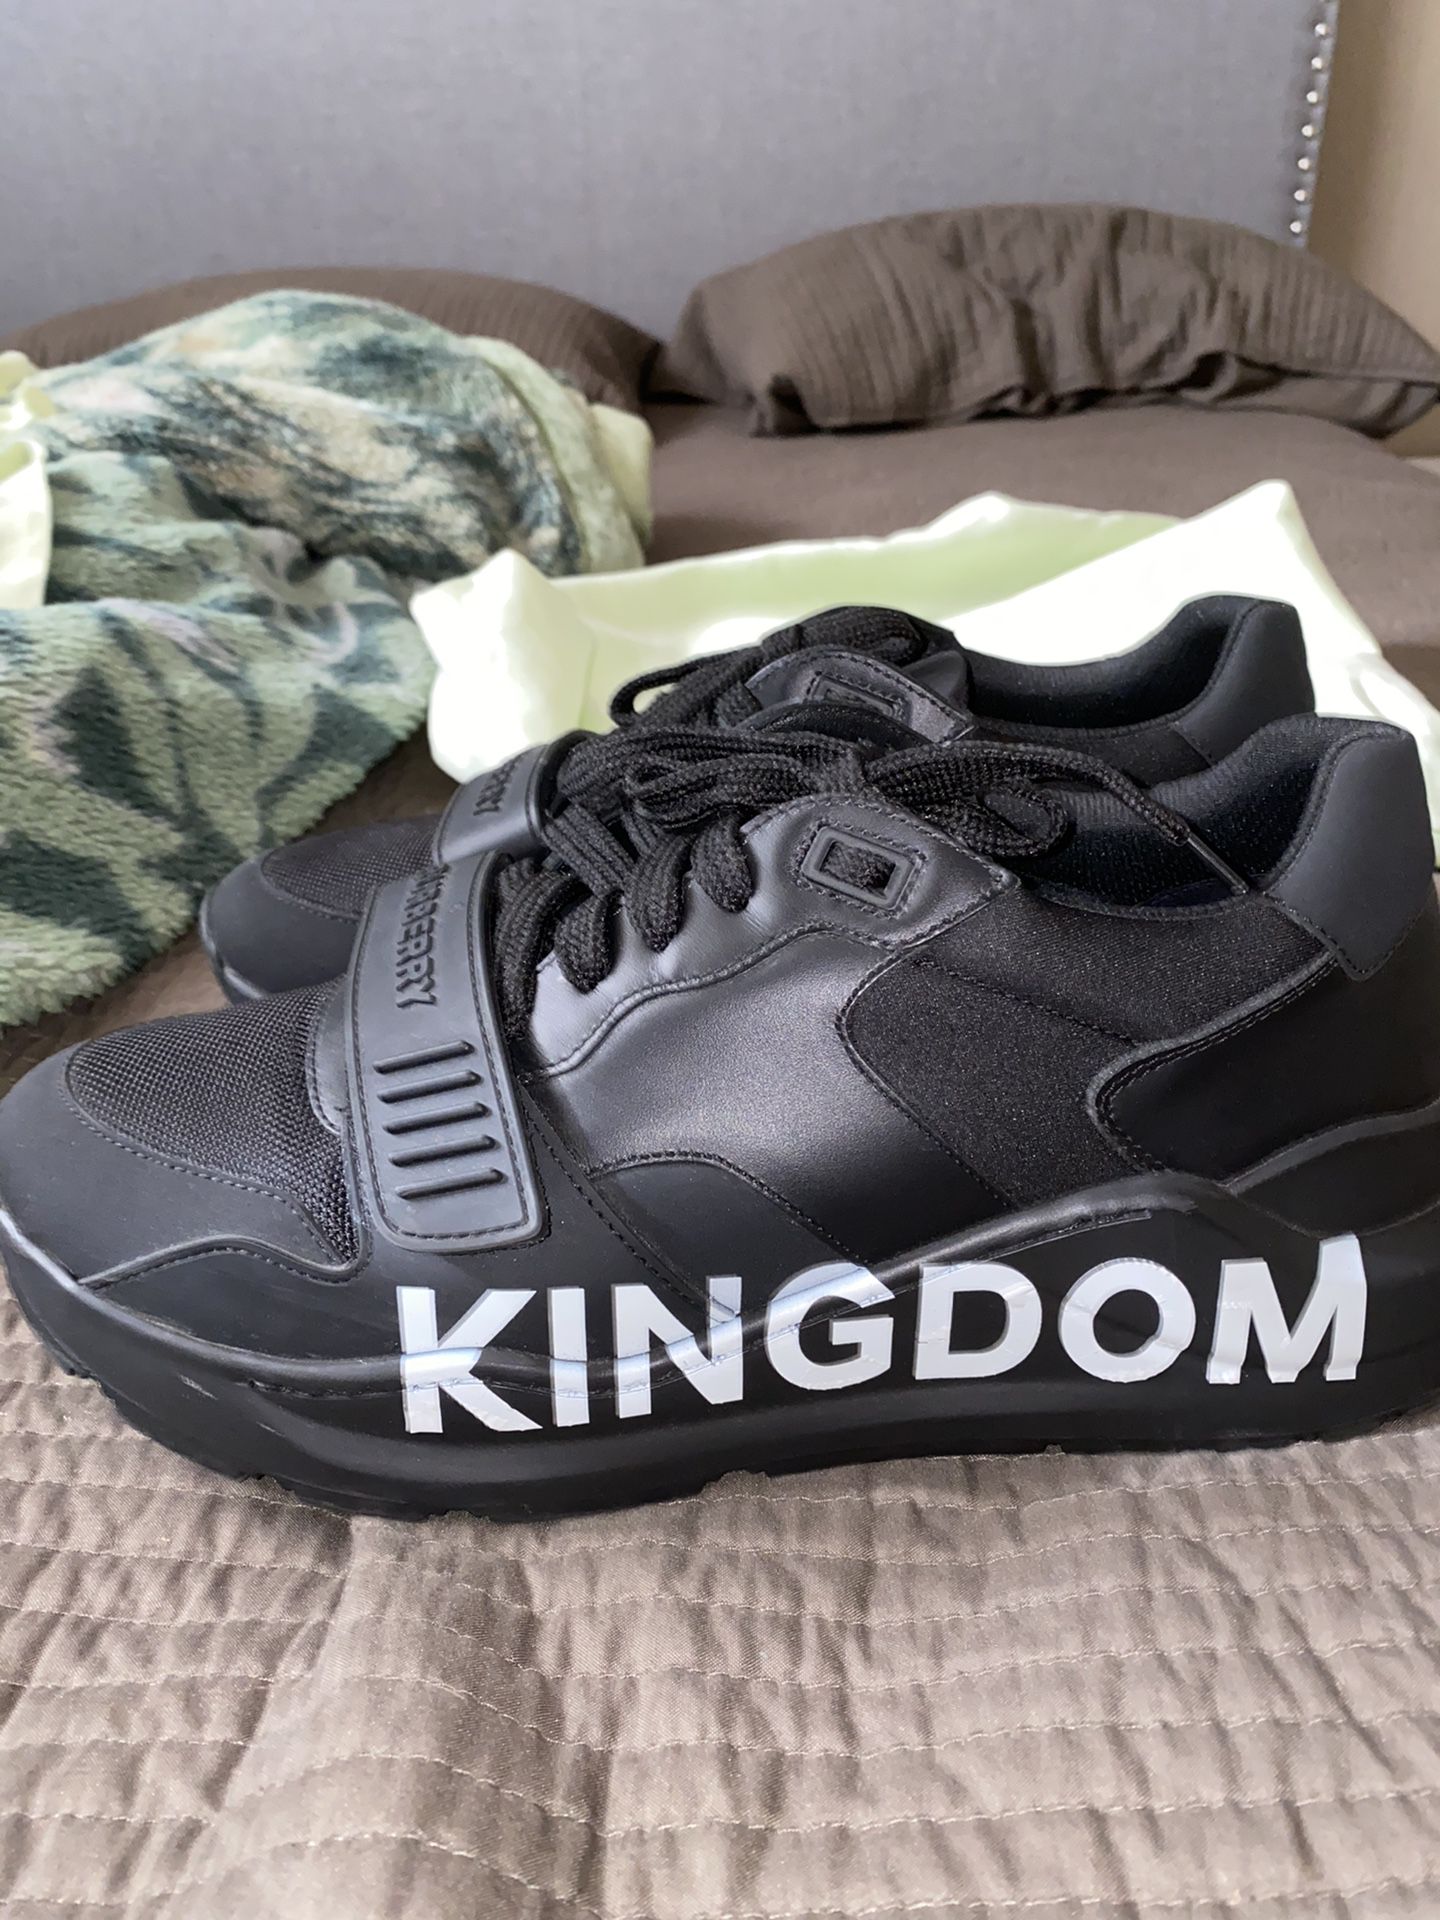 Burberry Kingdom Shoes